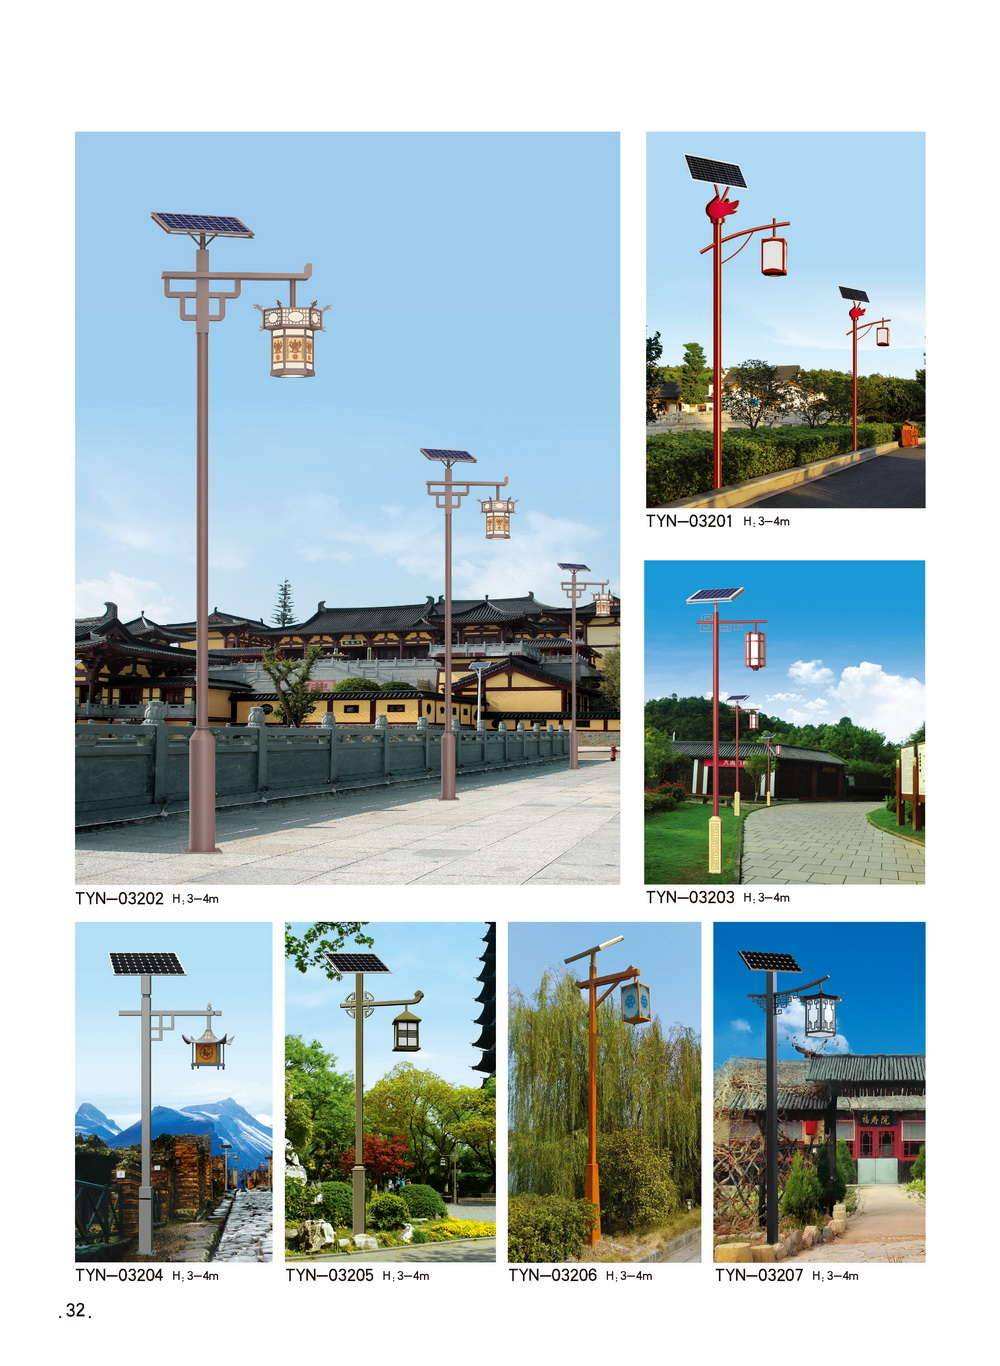 6-meter hot-dip galvanized photovoltaic road lighting lamp for new rural areas - LED solar street lamp